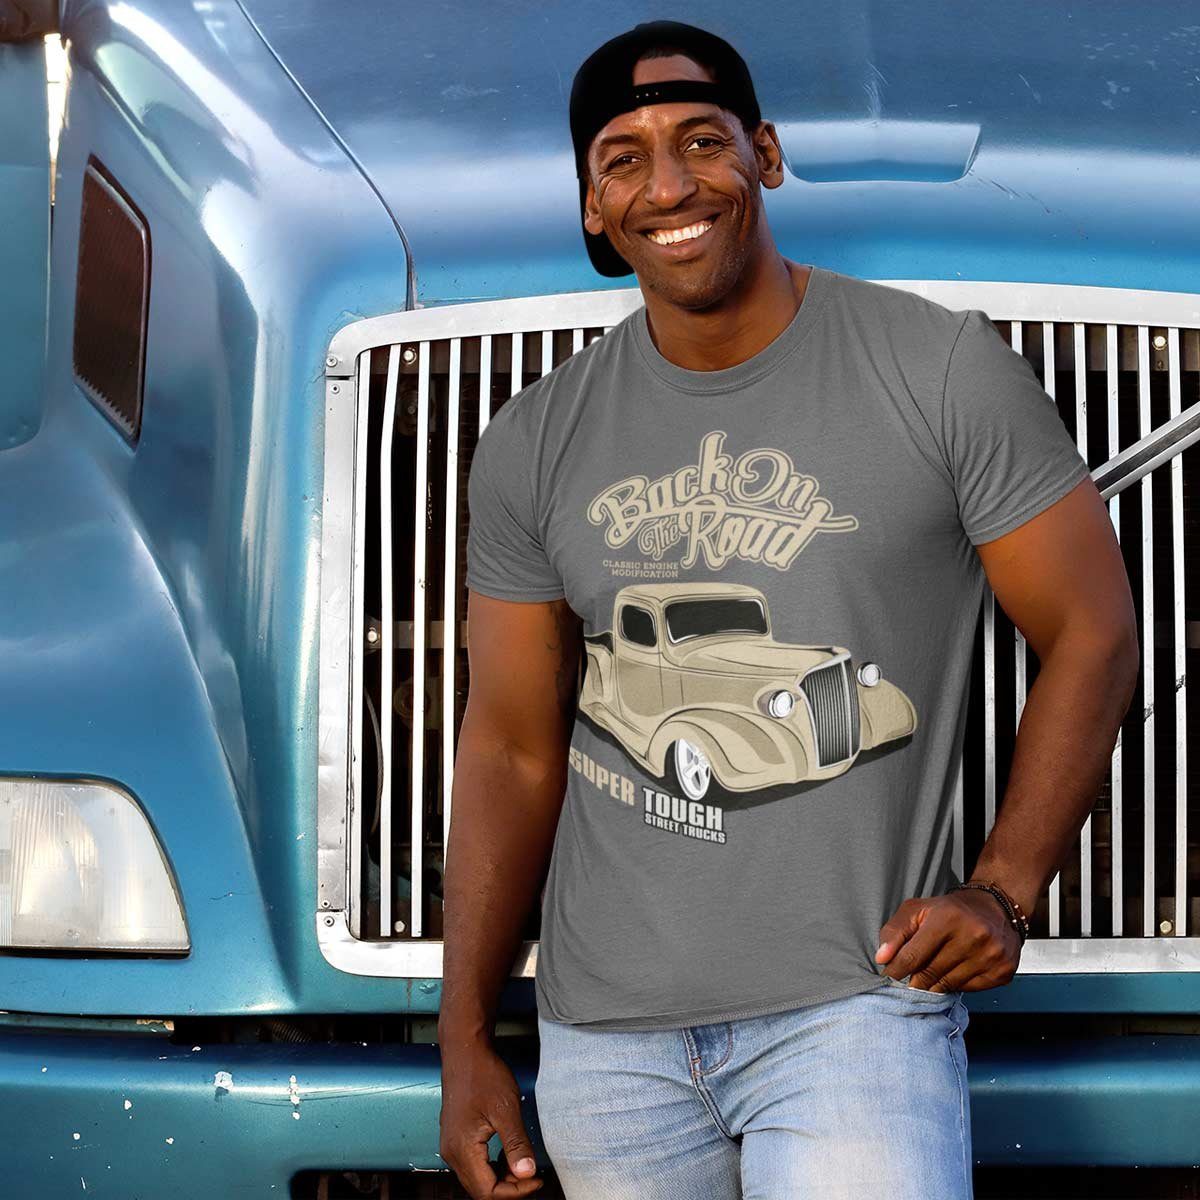 Rebel On Wheels Bomberjacke Herren US-Car Truck mit Schwarz / Motiv Tee Auto Street T-Shirt